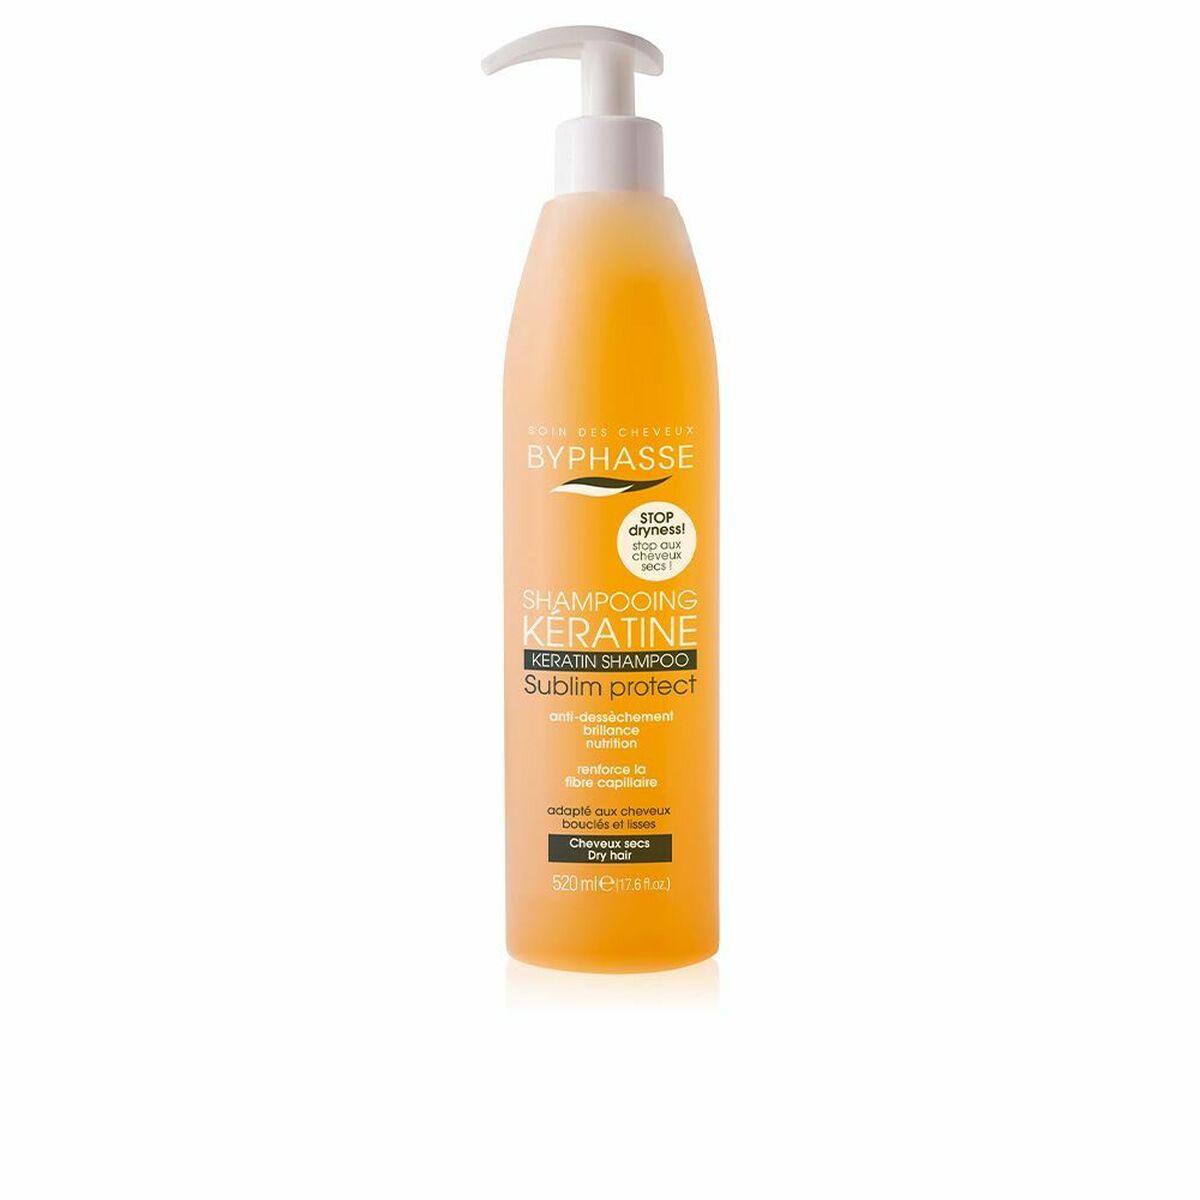 Shampoing Dermo-protecteur Byphasse 1000052029 Kératine Anti-dessèchement 250 ml